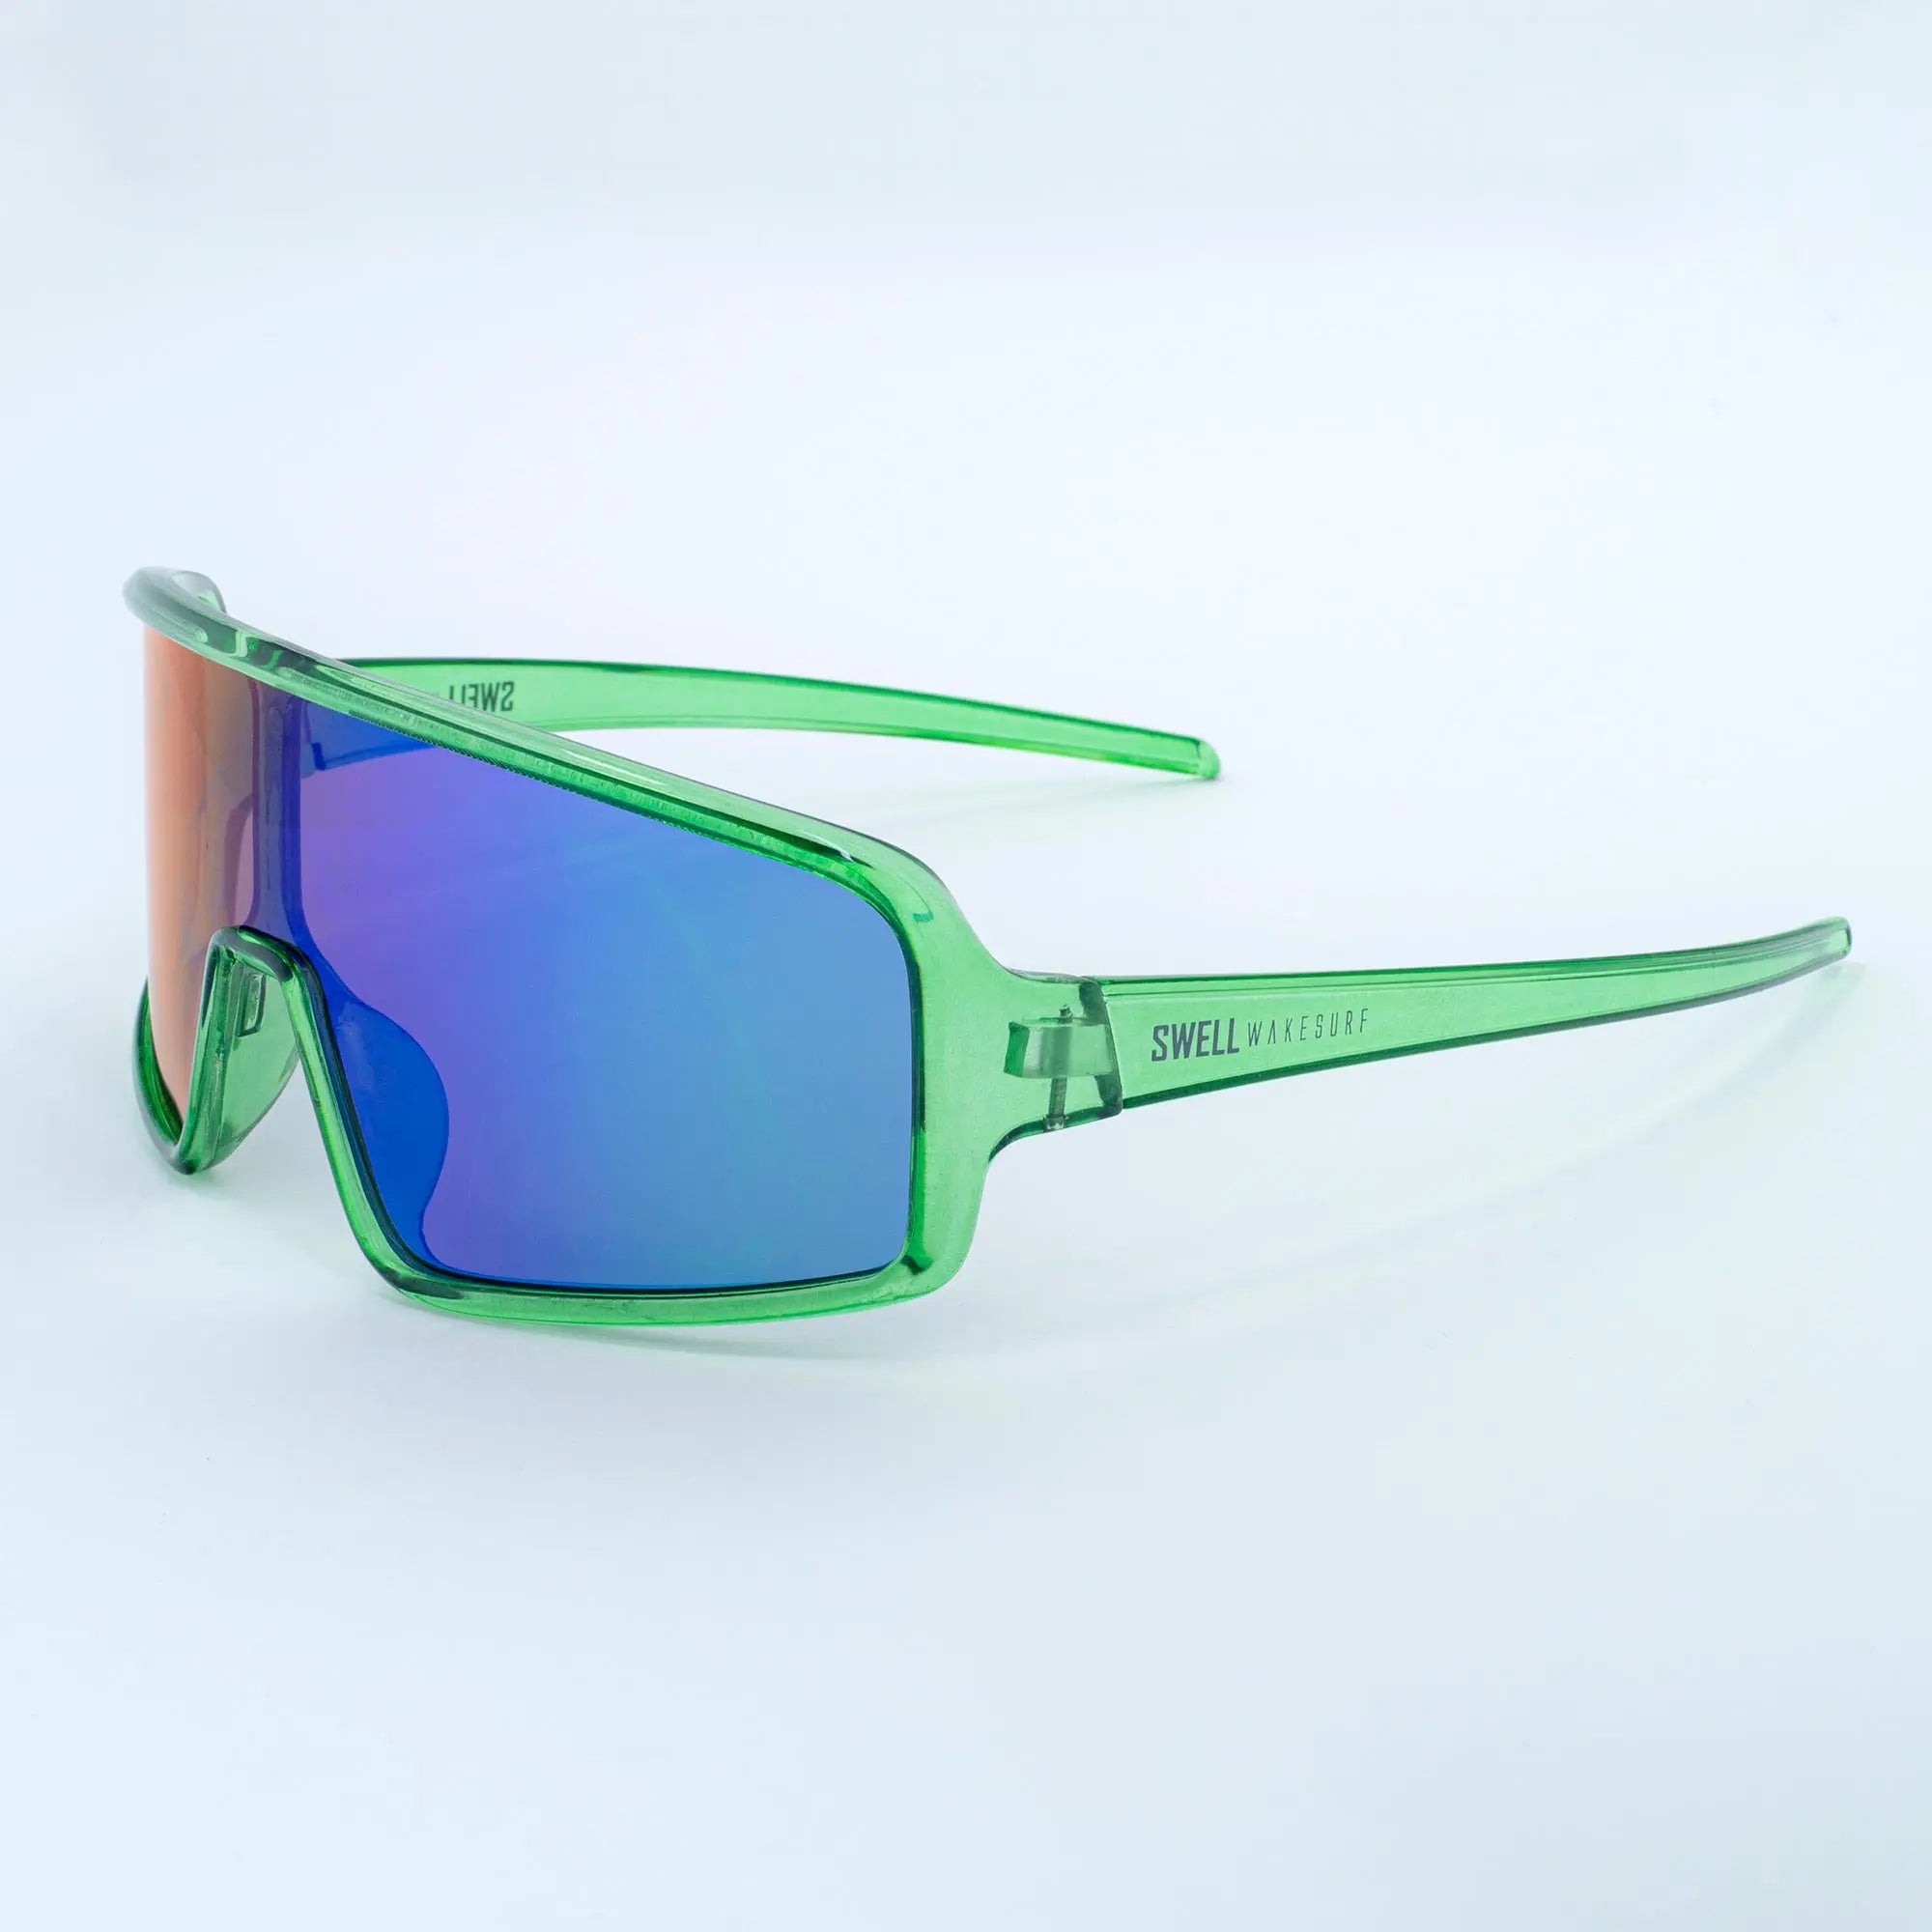 Swell Wakesurf - Full-On Polaraized Sunglasses 2021 Blaze